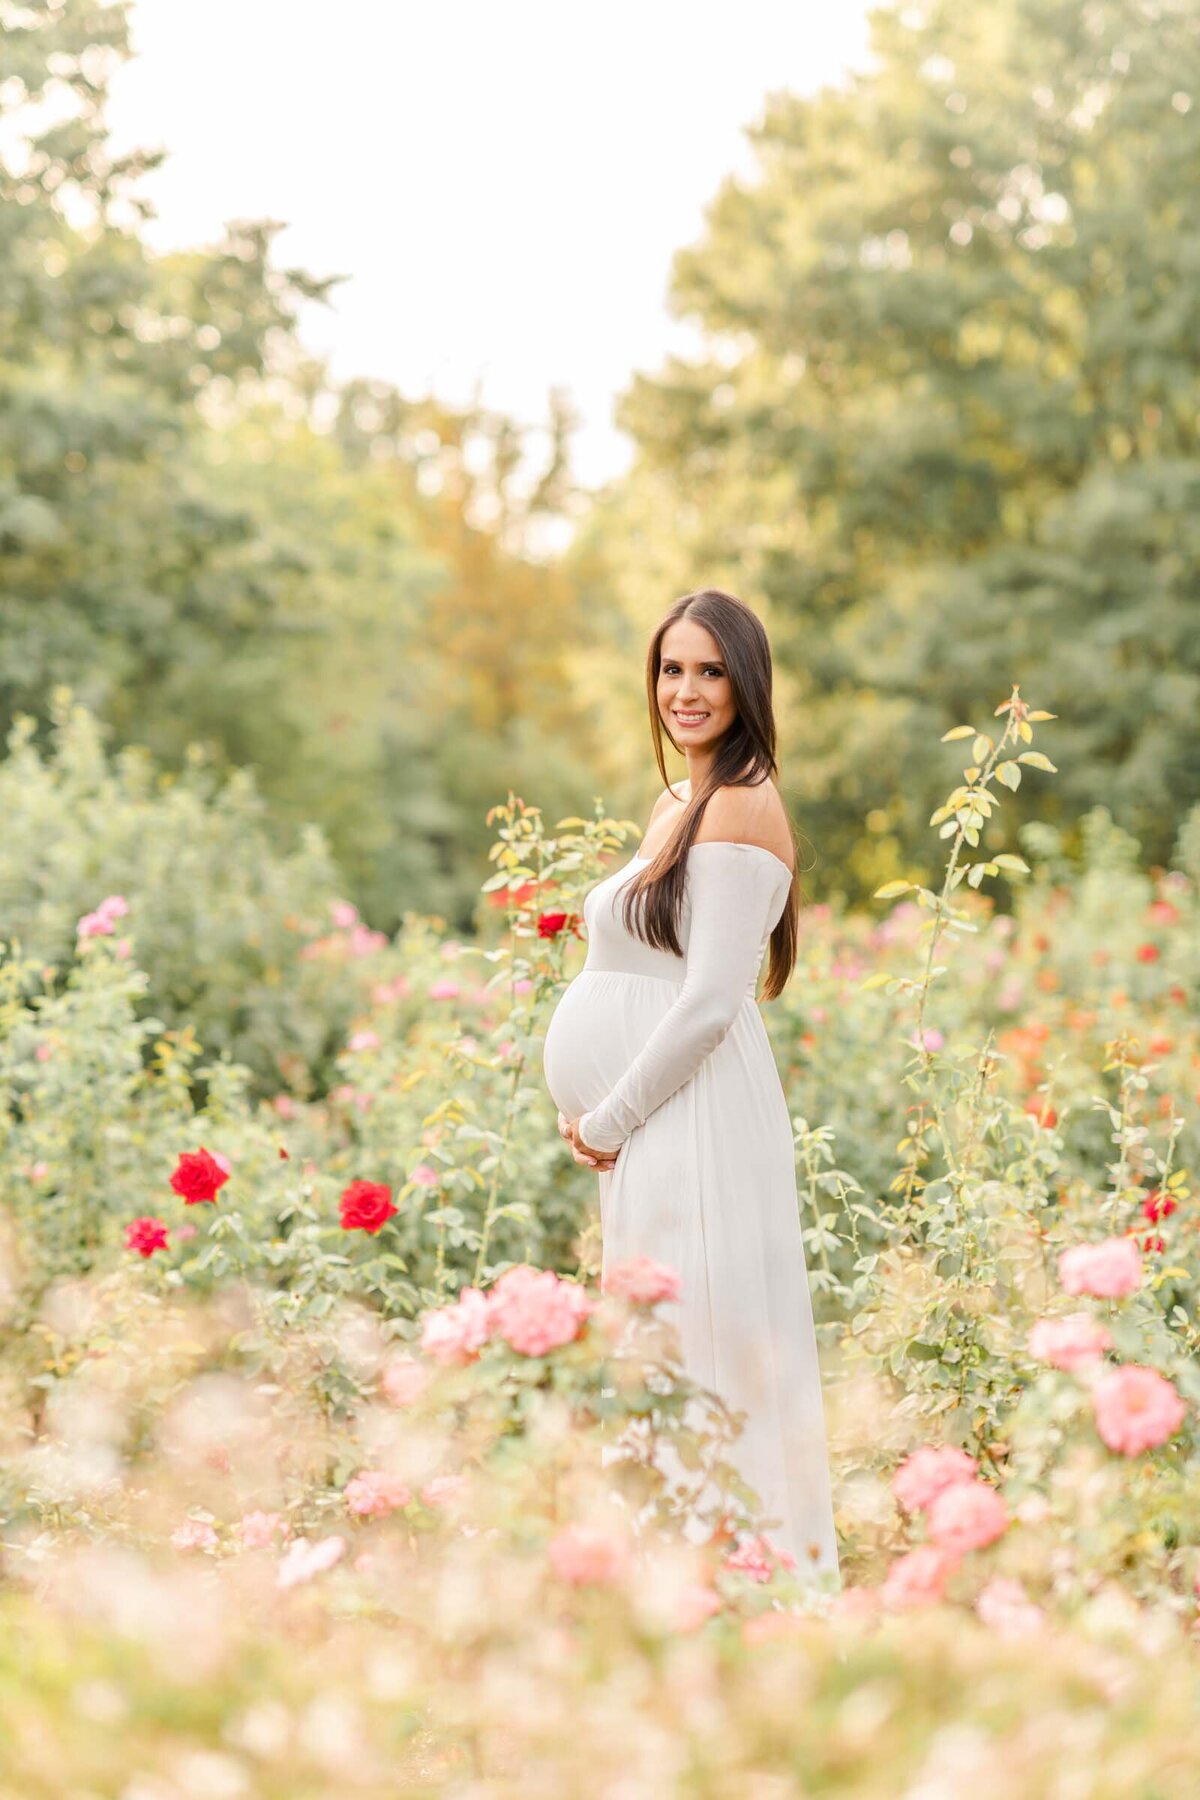 DMV Maternity Photographer - Heidi Fam Photography